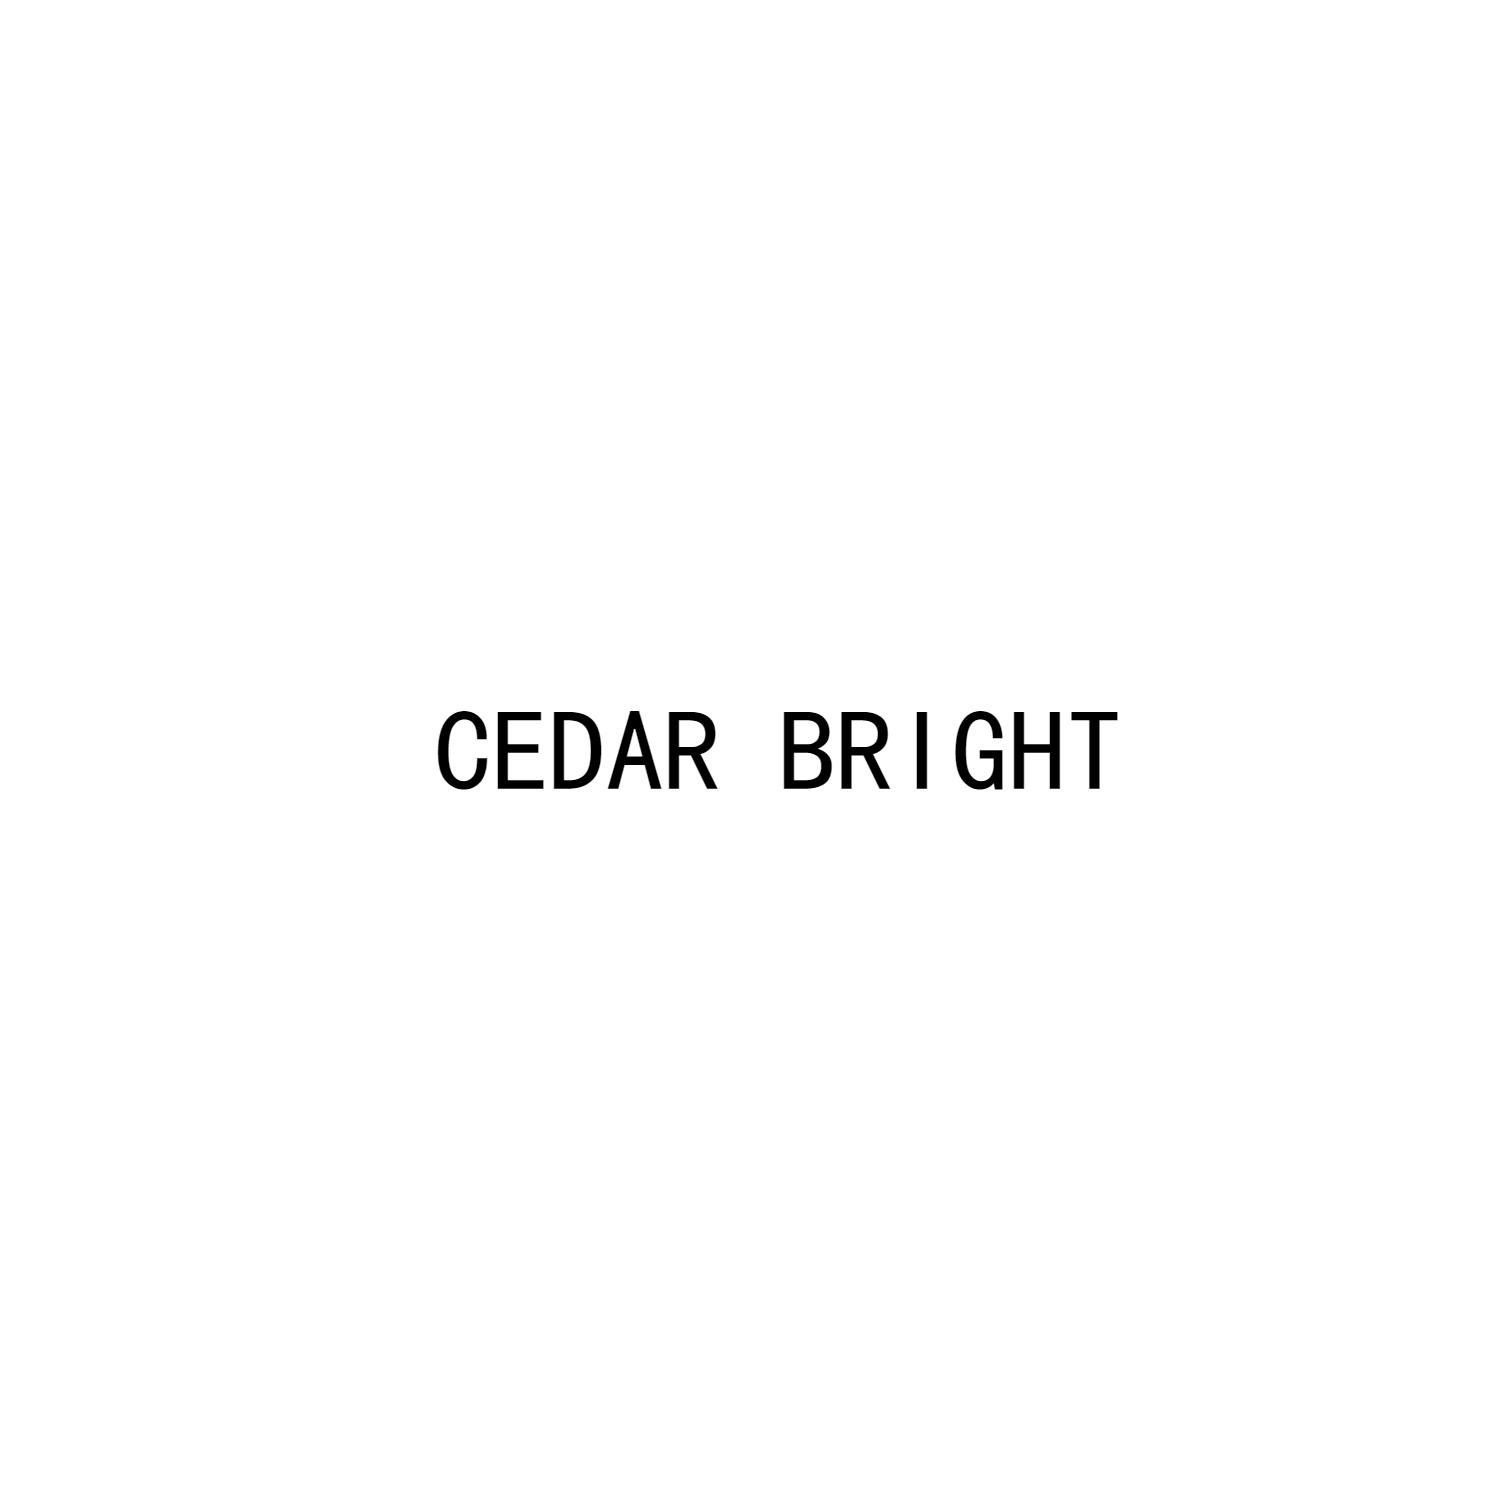 CEDAR BRIGHT